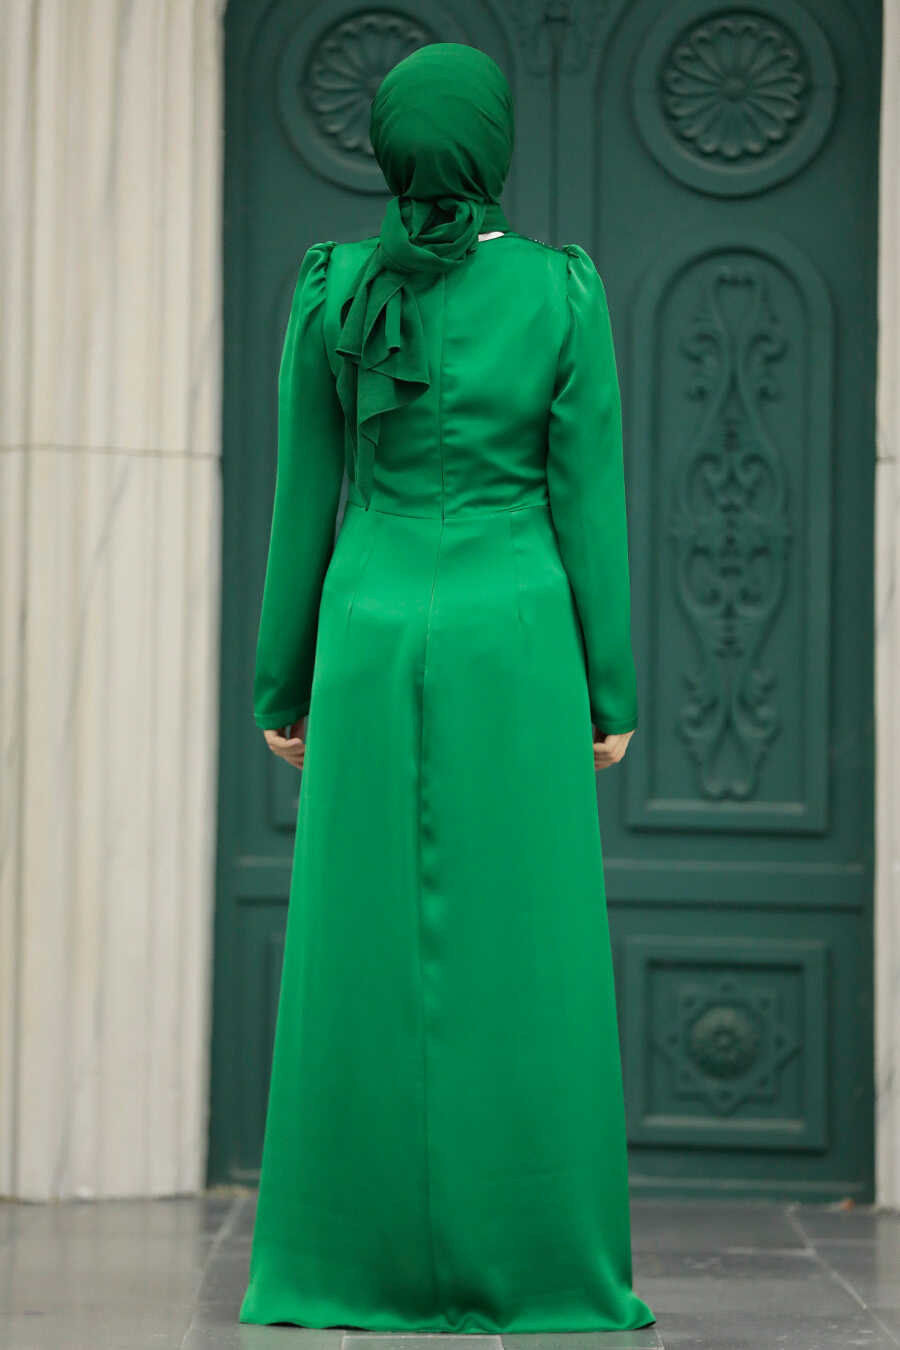 Neva Style - Stylish Green Muslim Bridesmaid Dress 40773Y